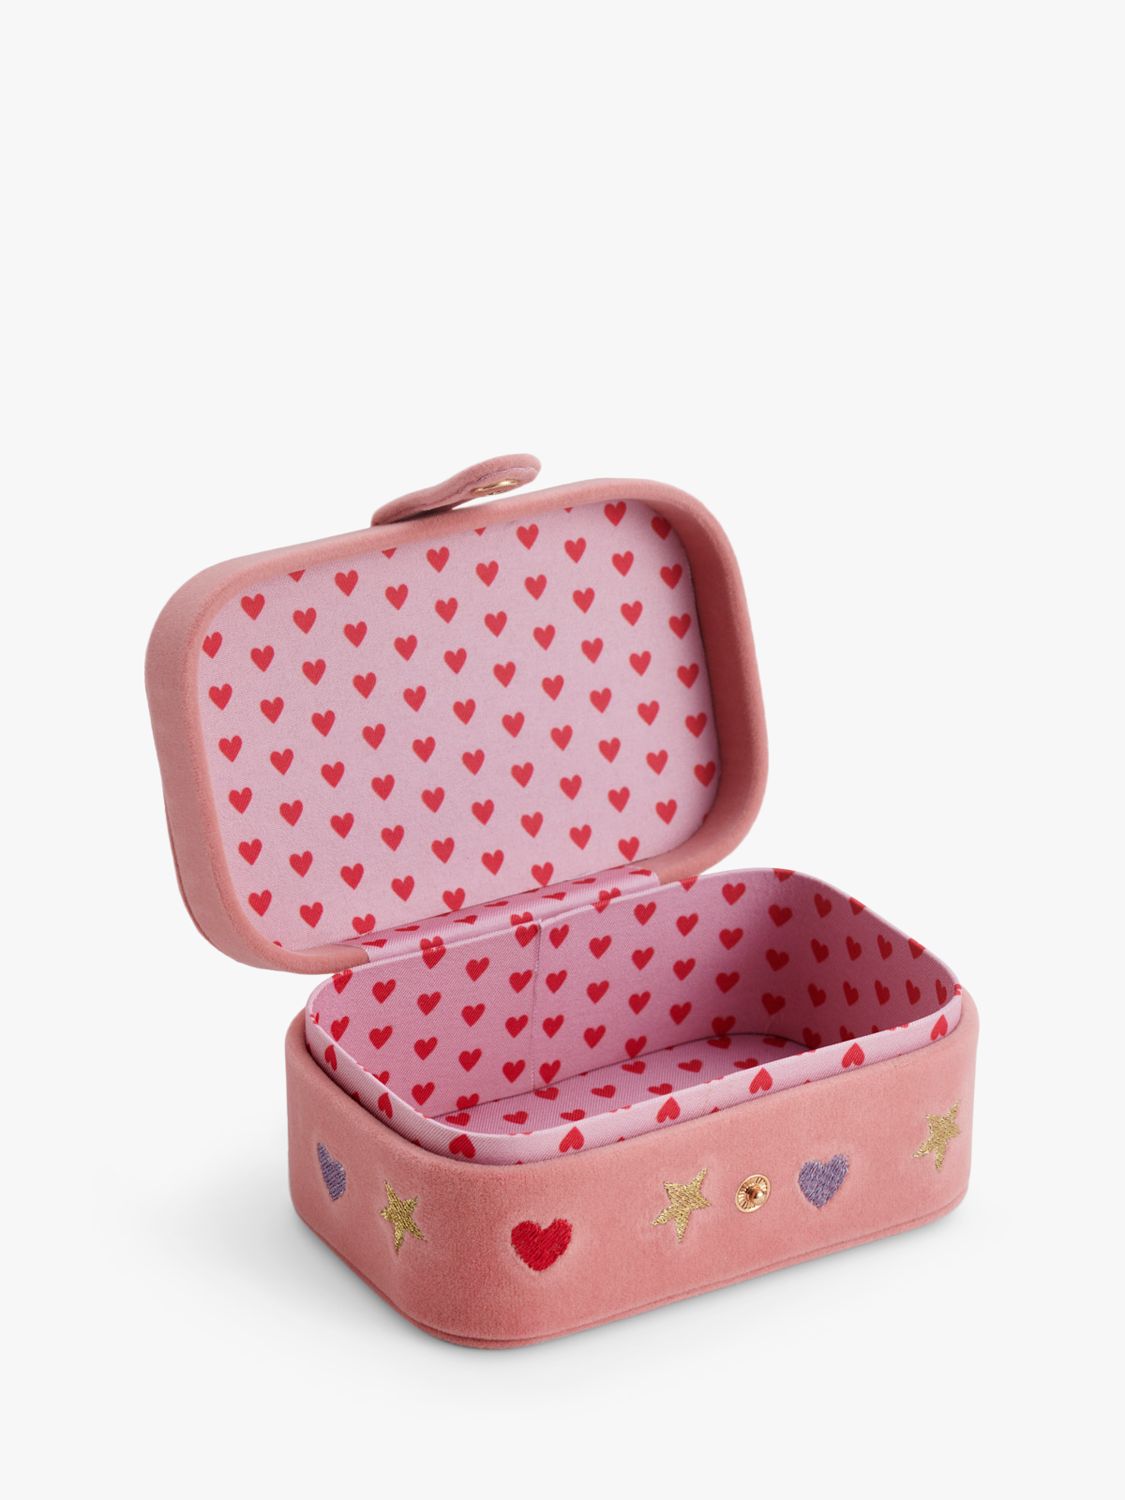 Buy Stych Kids'  Unicorn Jewellery Box, Pink Online at johnlewis.com